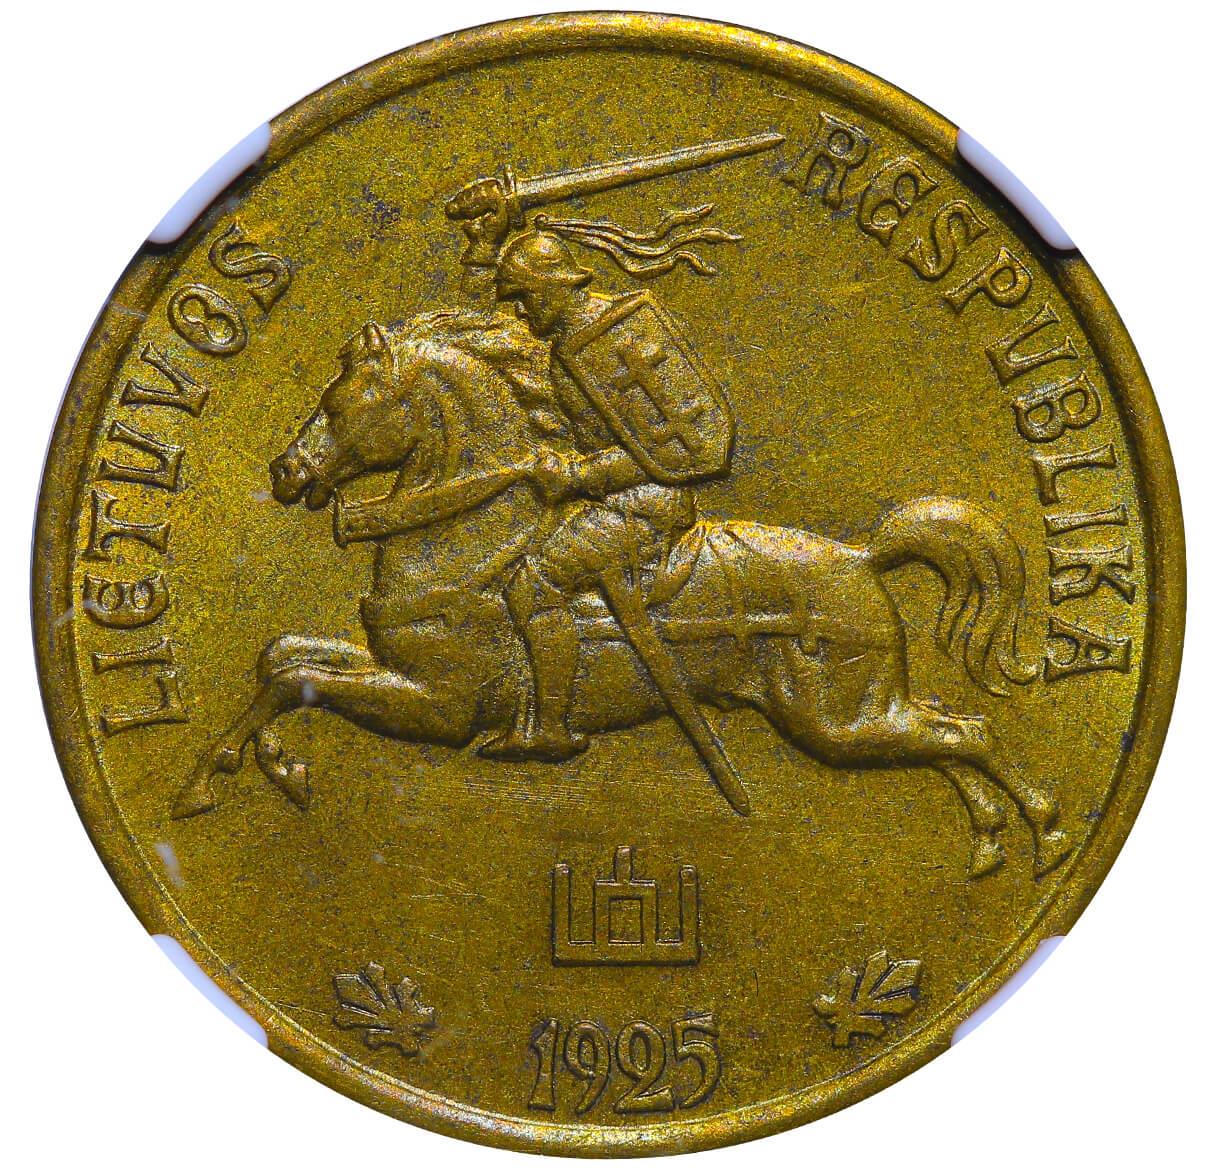 Lithuania, 10 Centu, 1925 year, NGC, MS 64 - Image 2 of 3